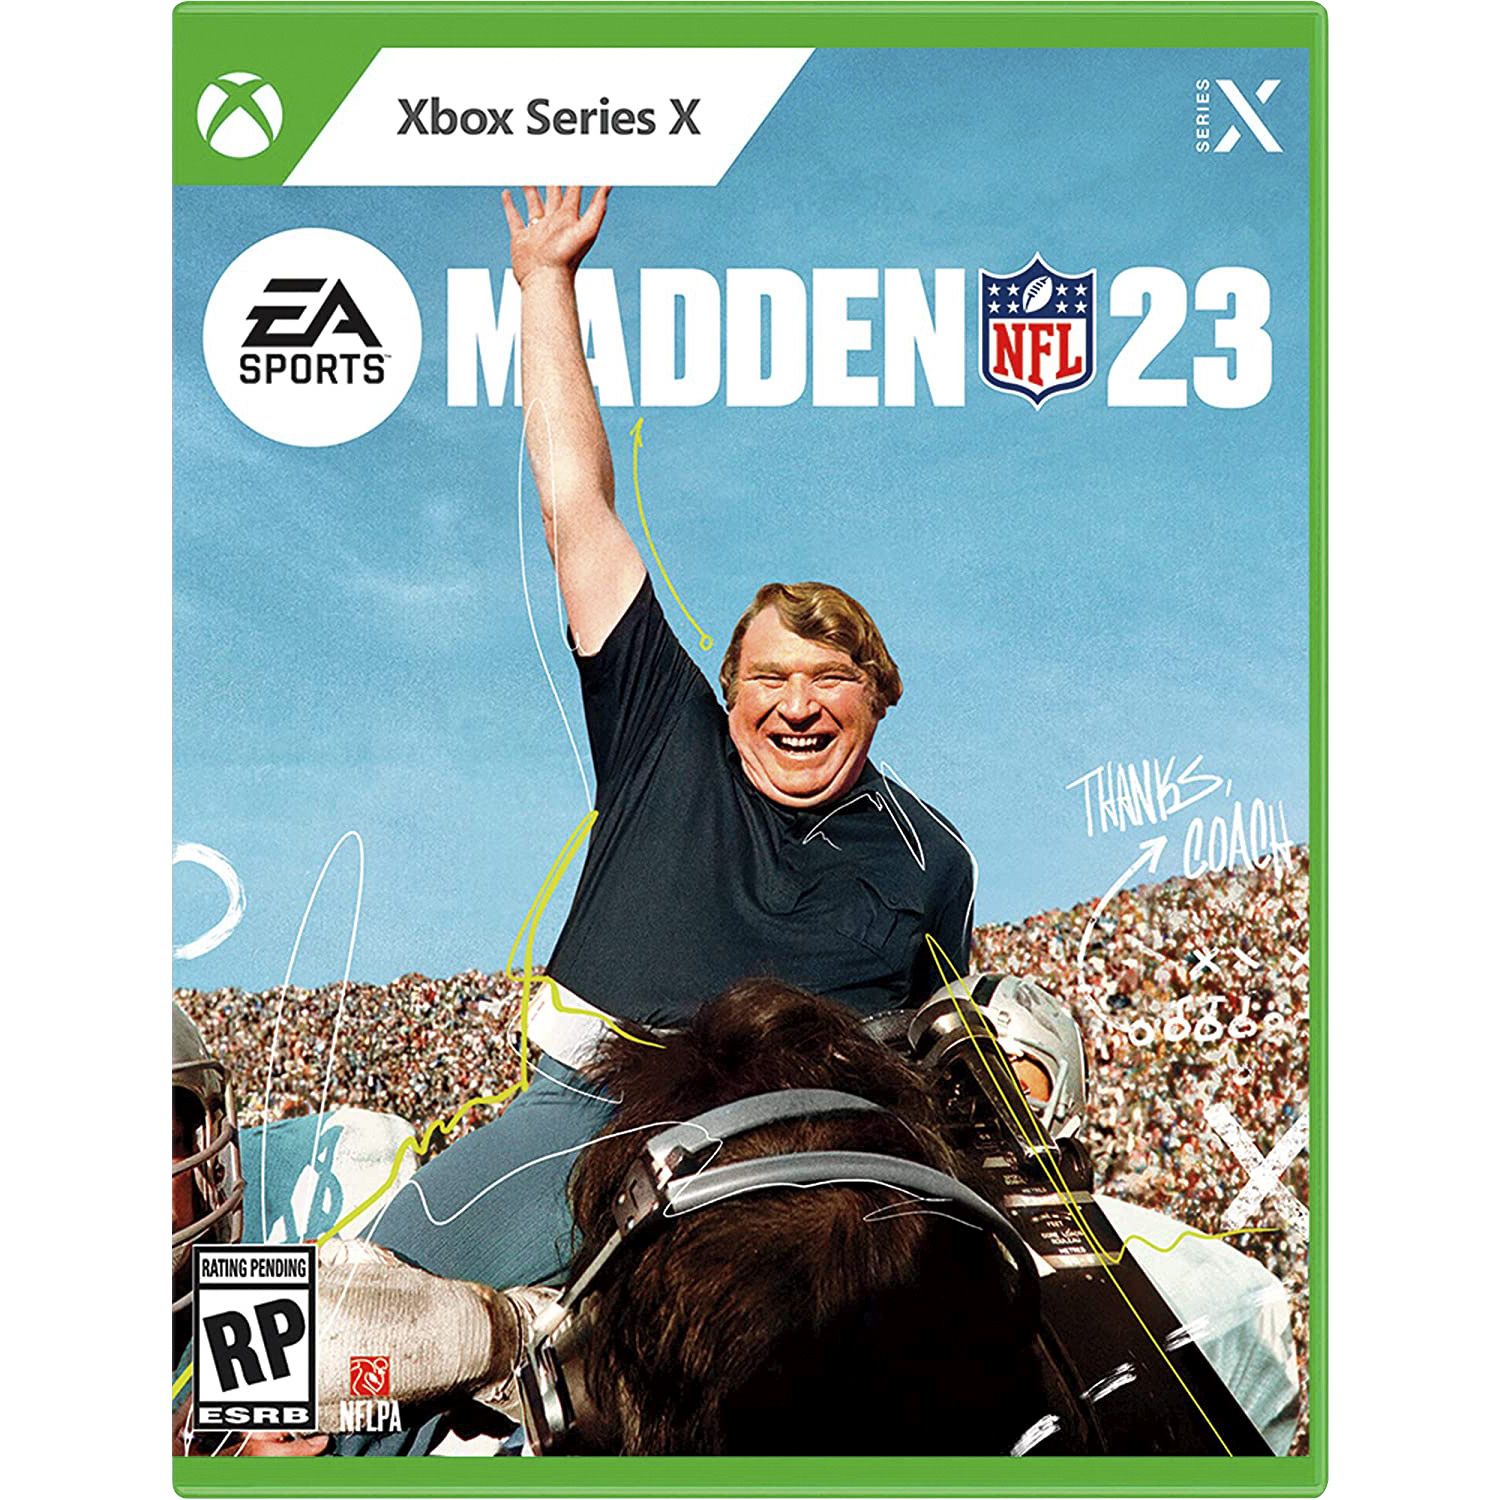 Xbox Series x Madden NFL 23.